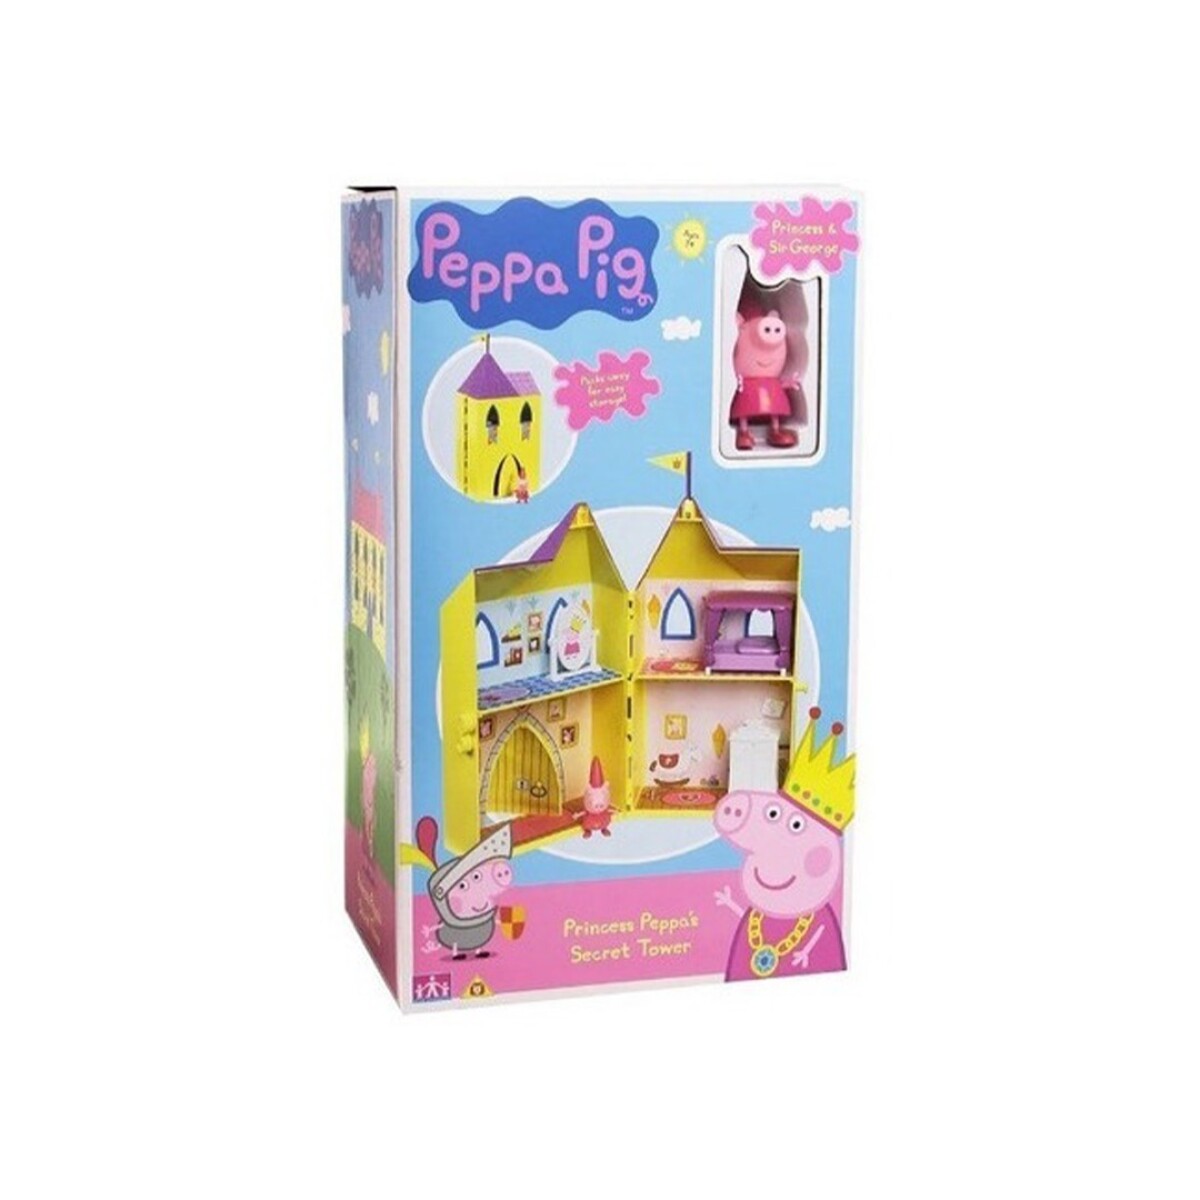 Figura Princesa Peppa Pig con Torre Secreta - 001 